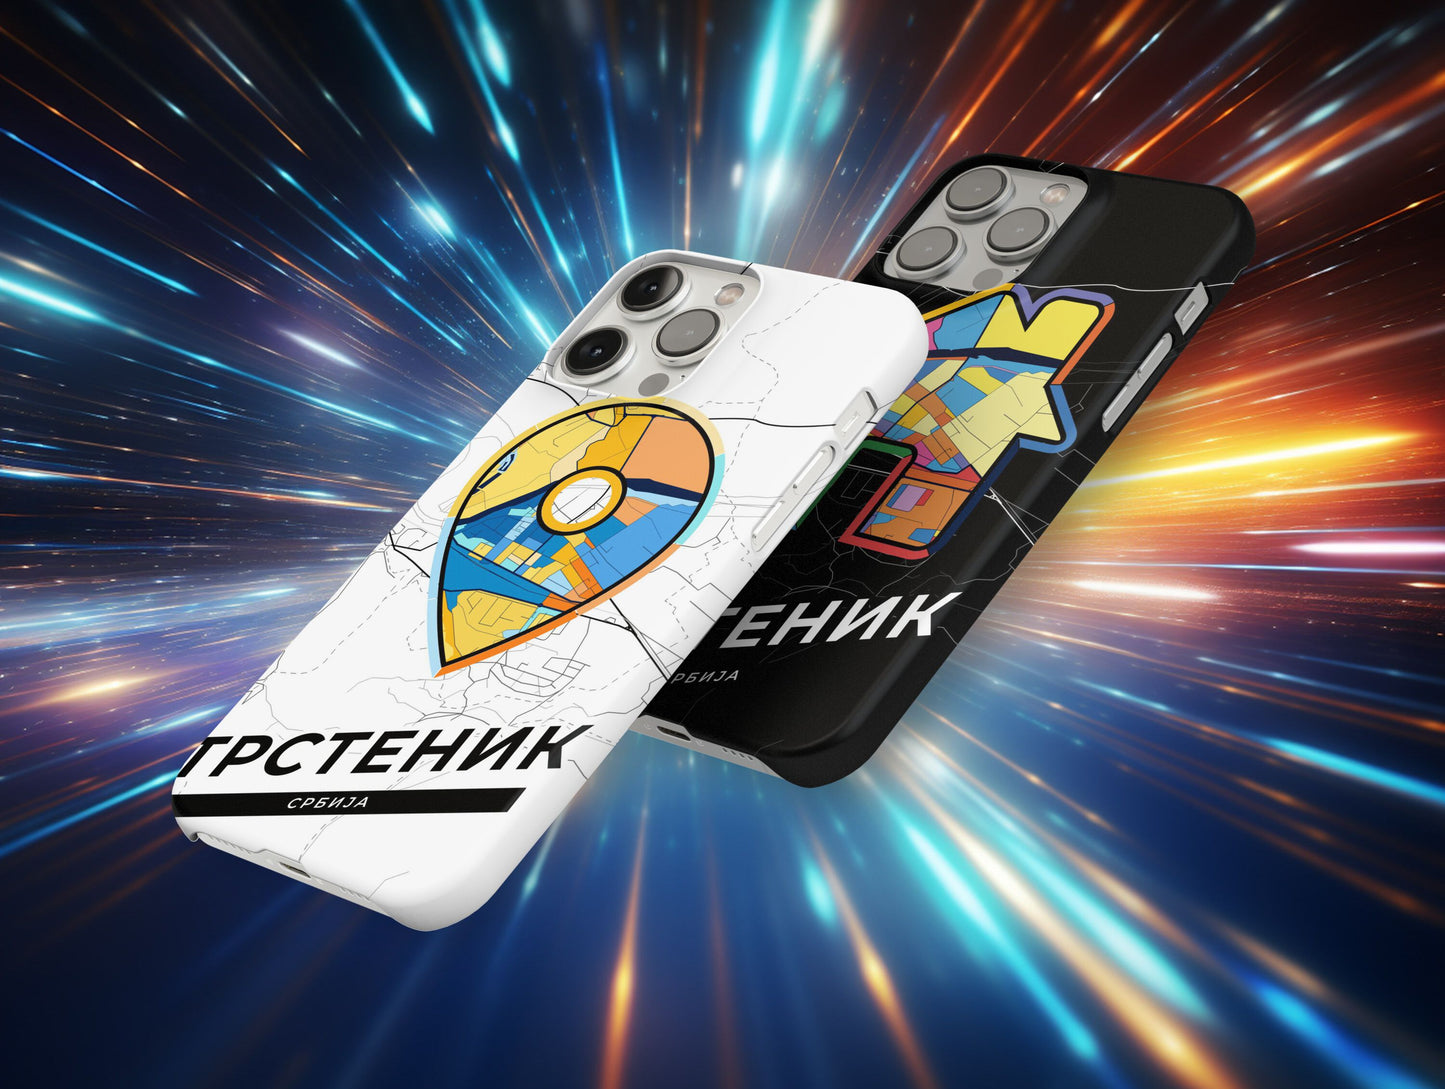 Trstenik Serbia slim phone case with colorful icon